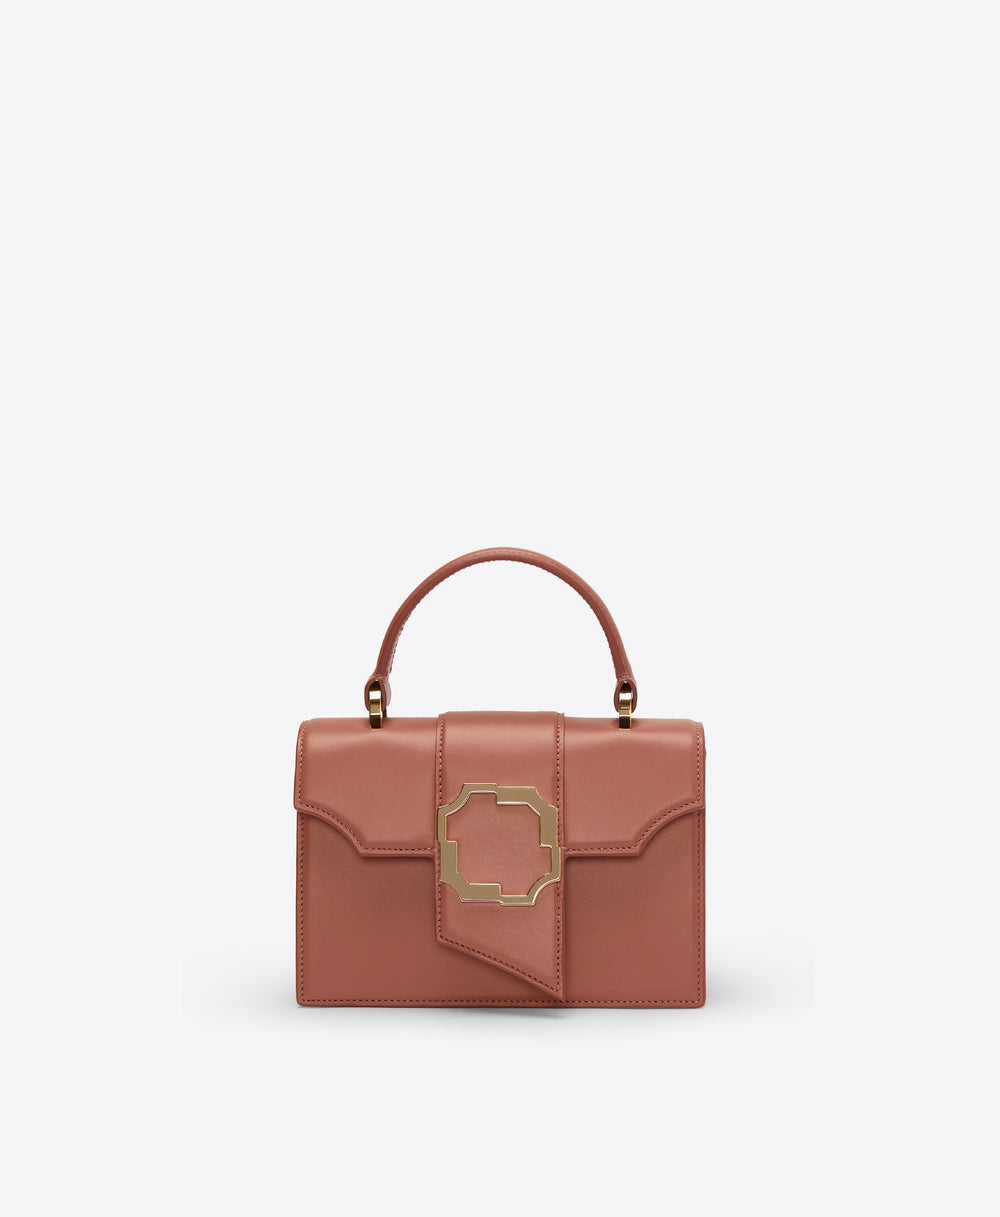 Audrey Deep Blush Leather Mini Handbag Malone Souliers